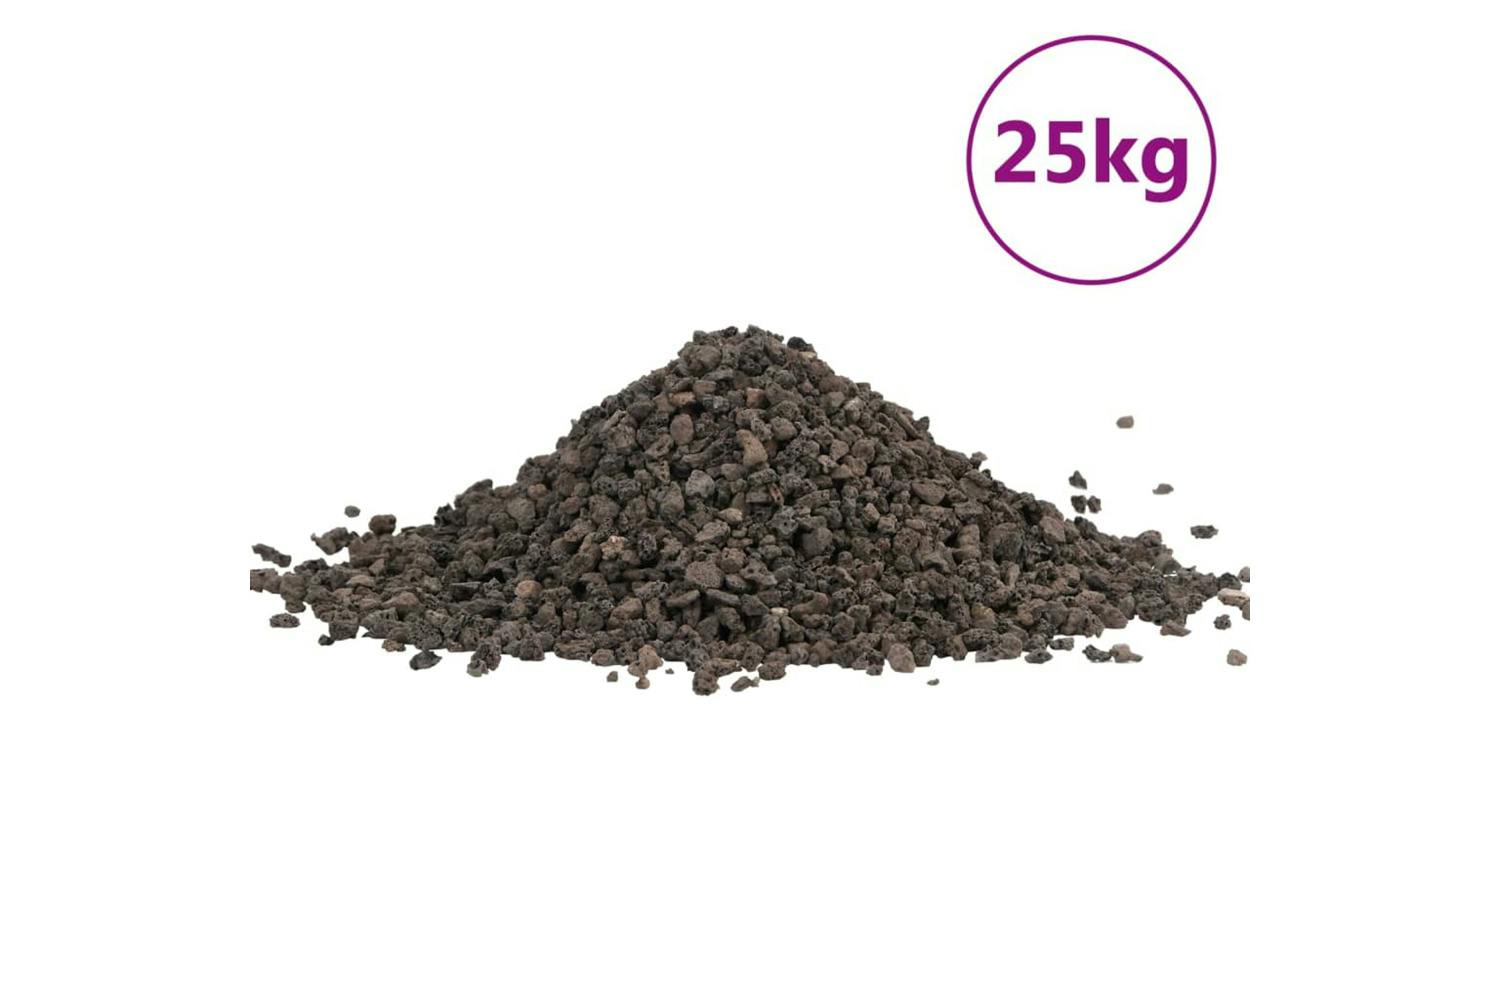 Vidaxl 3217163 Basalt Gravel 25 Kg Black 5-8 Mm